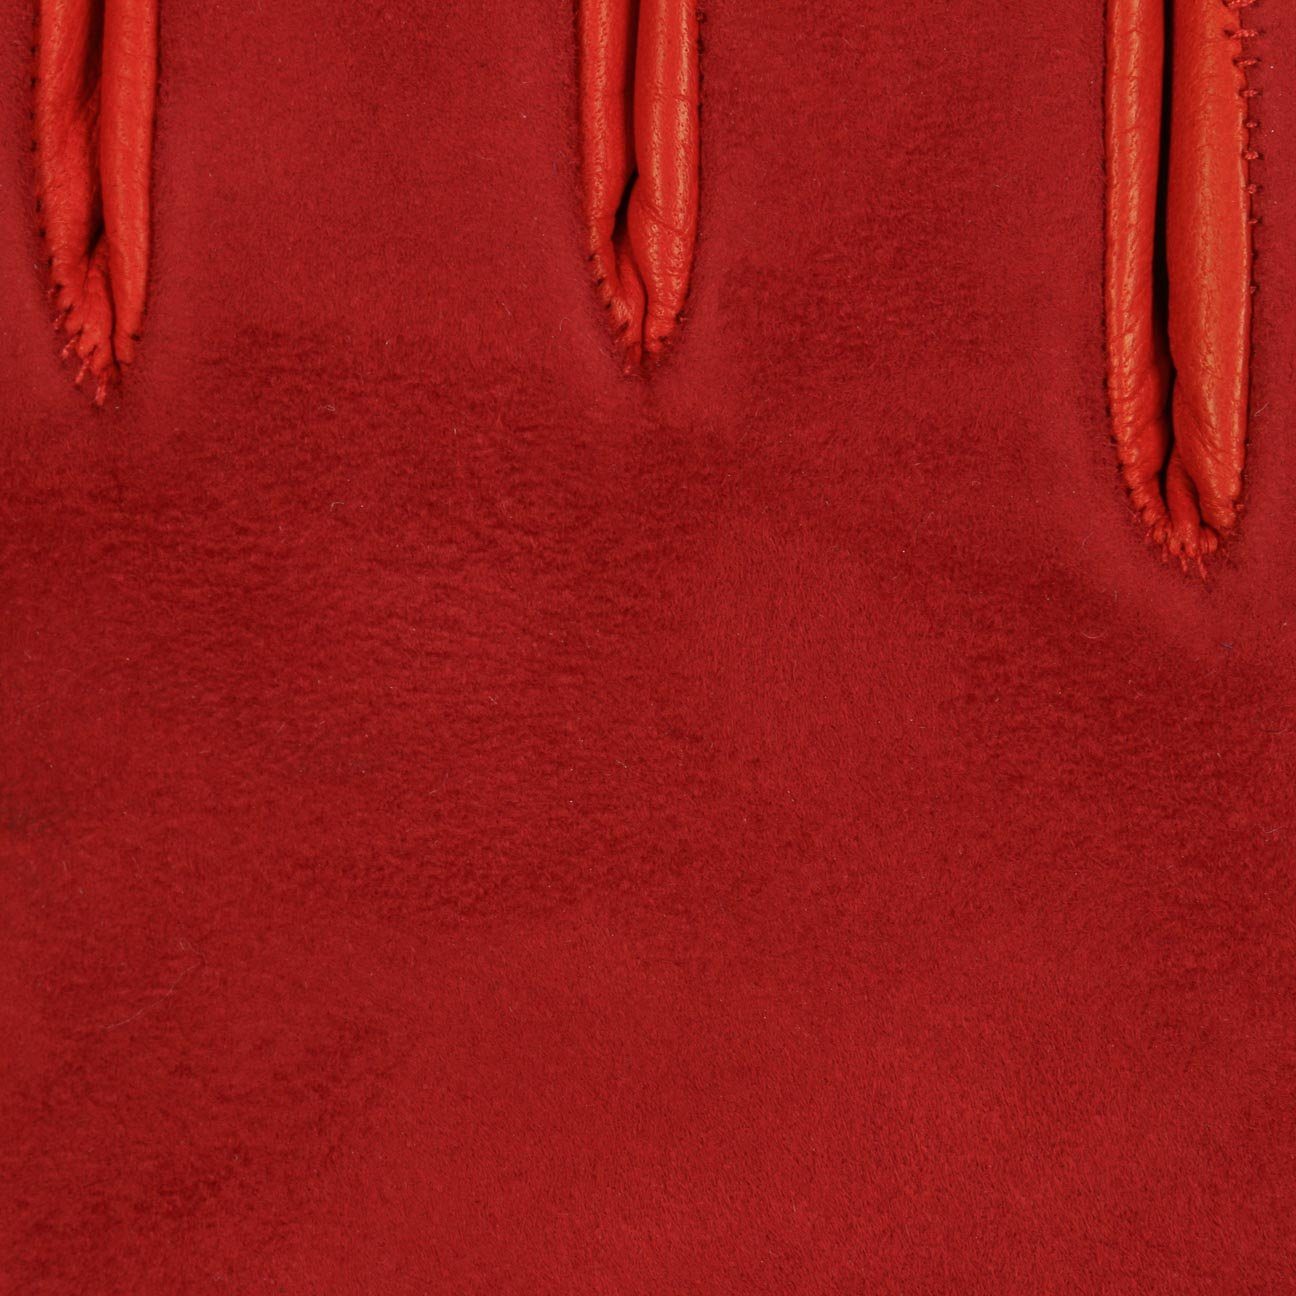 Caridei Lederhandschuhe Fingerhandschuhe mit Futter, in rot Italy Made